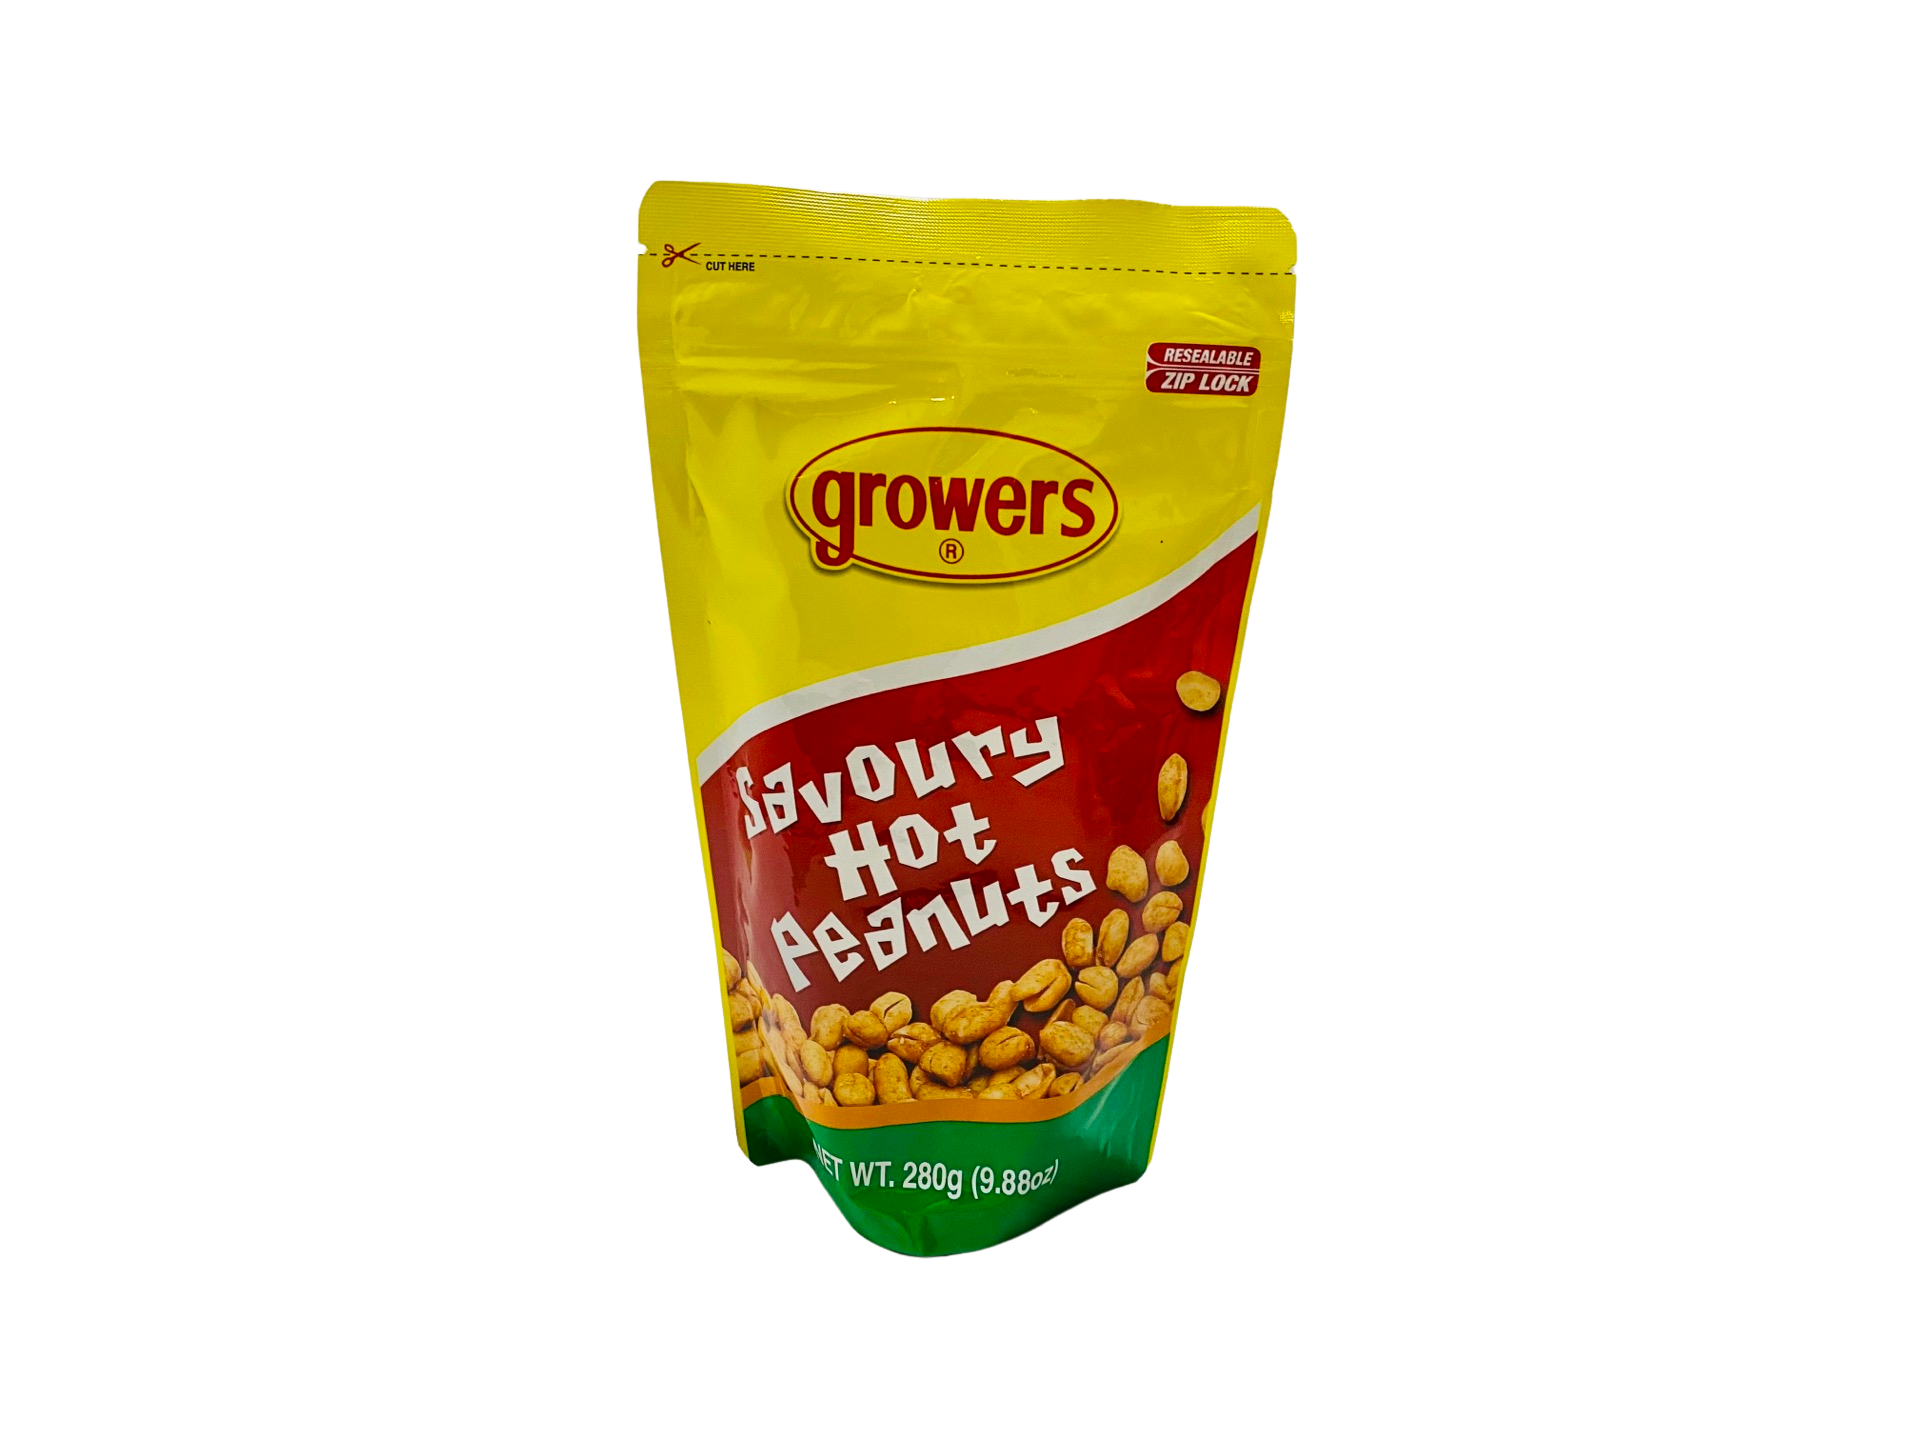 Growers Savory Hot peanuts 280gx3